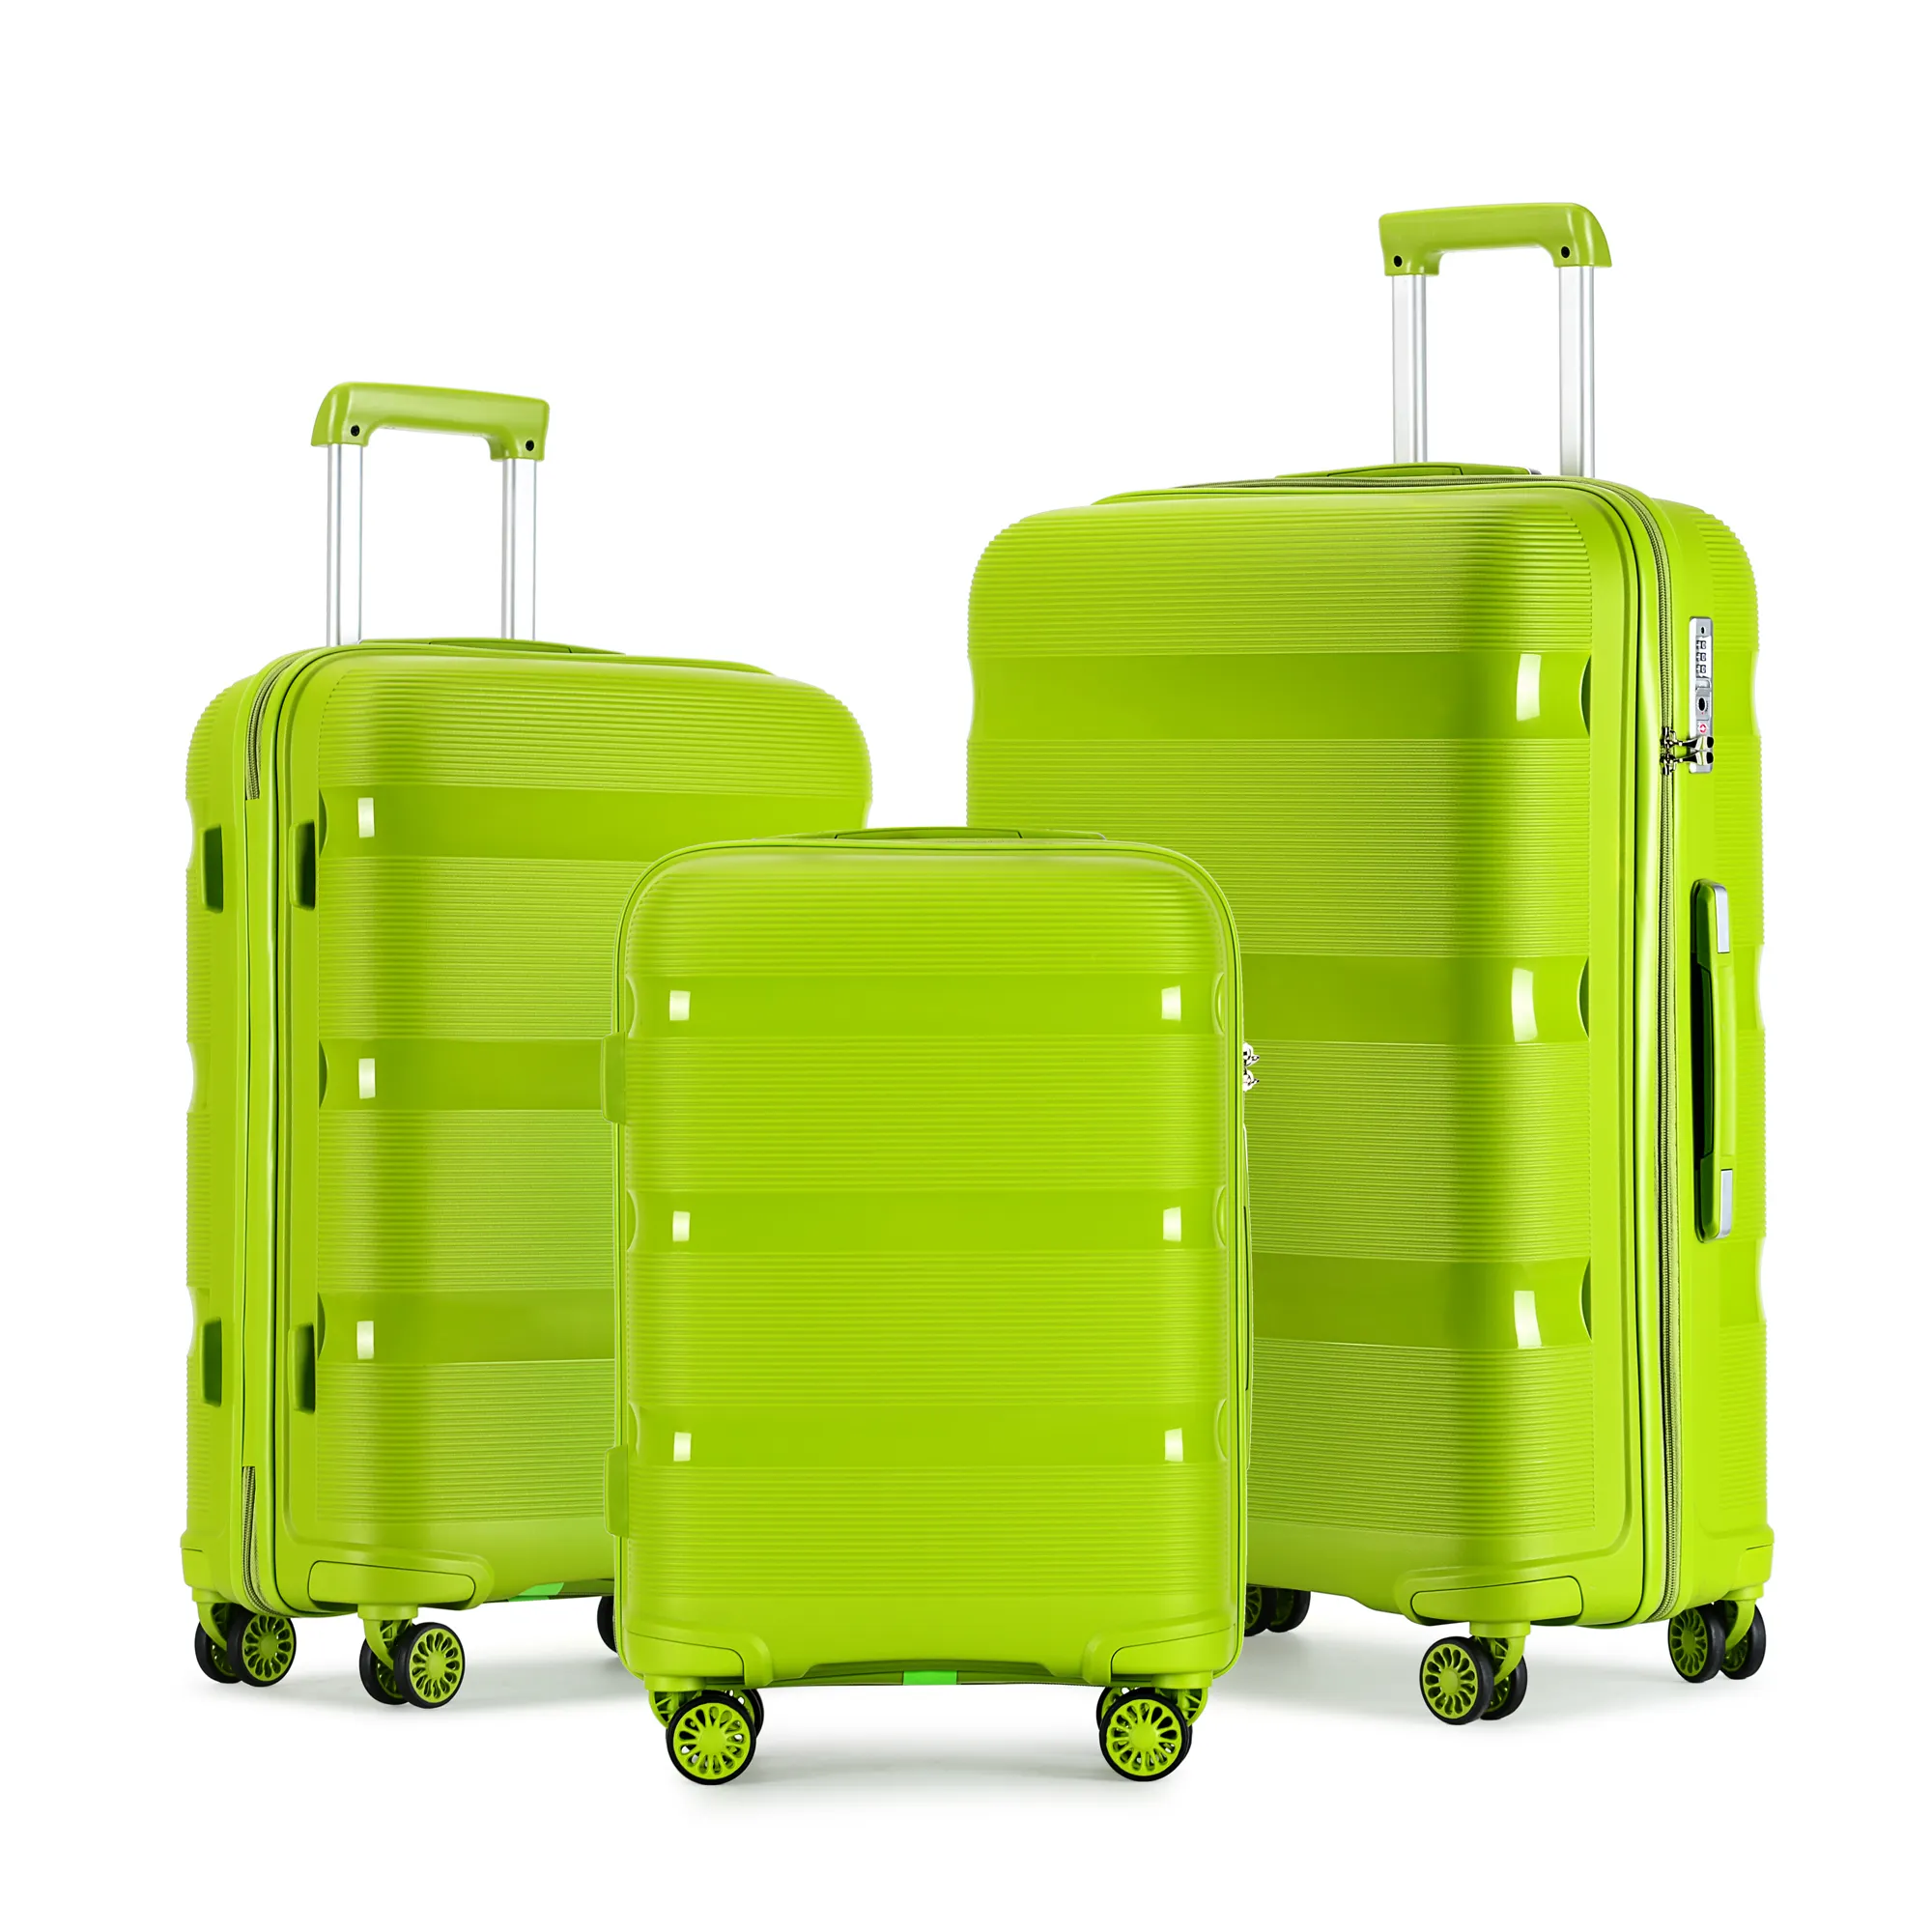 Hard Case PP Trolley Luggage Travel Suitcase Bag 20 24 28 Inch Customization Luggage Set